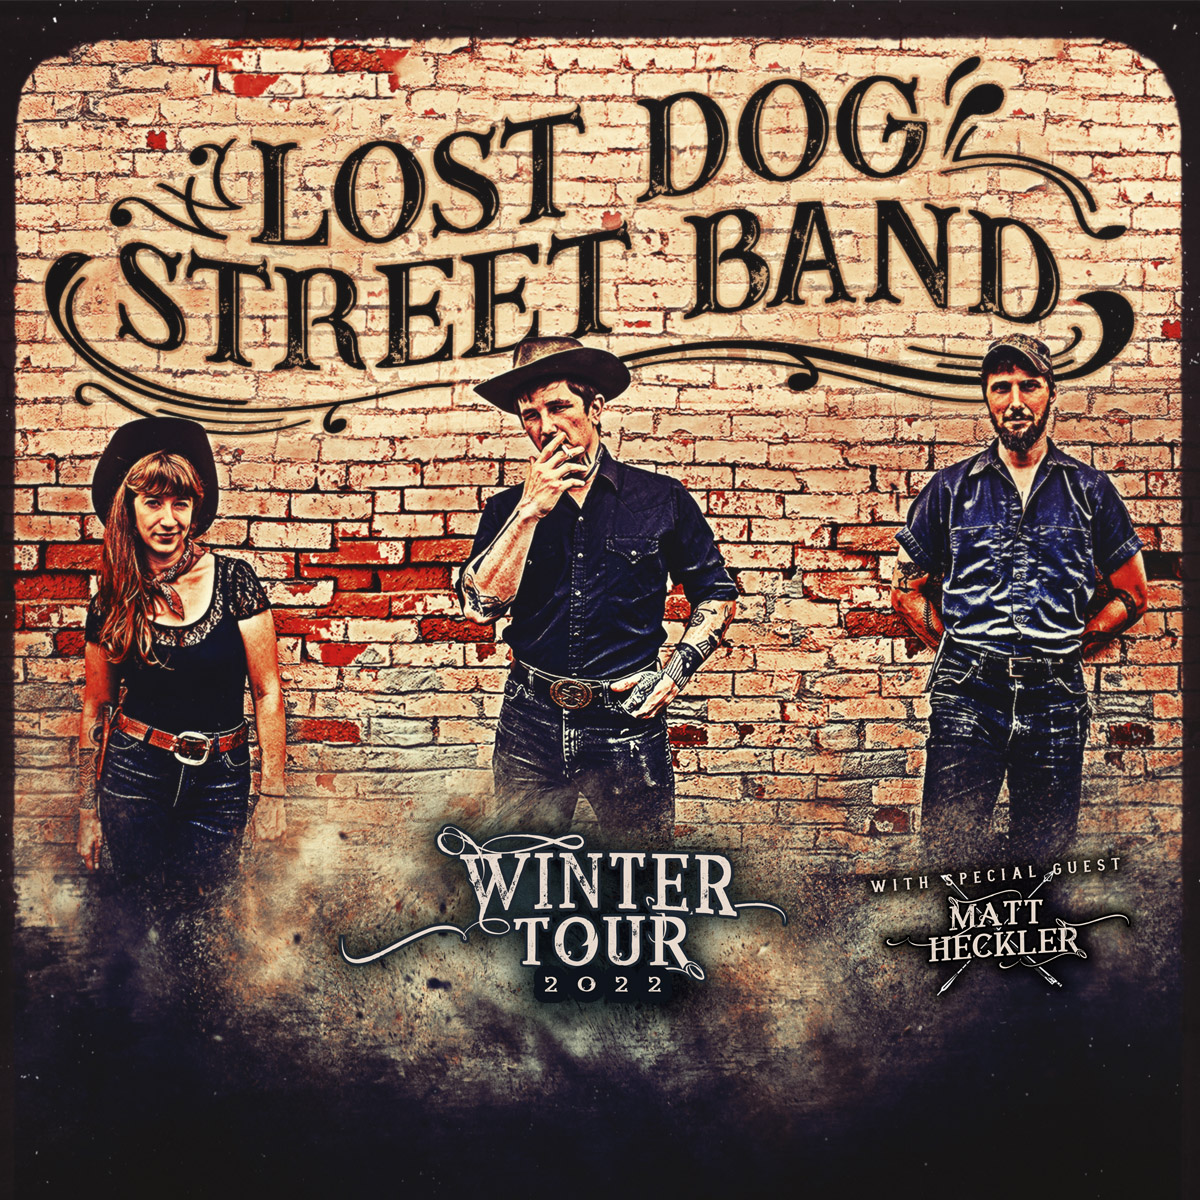 Band, street moonshiner dog lost ALBUM: Lost